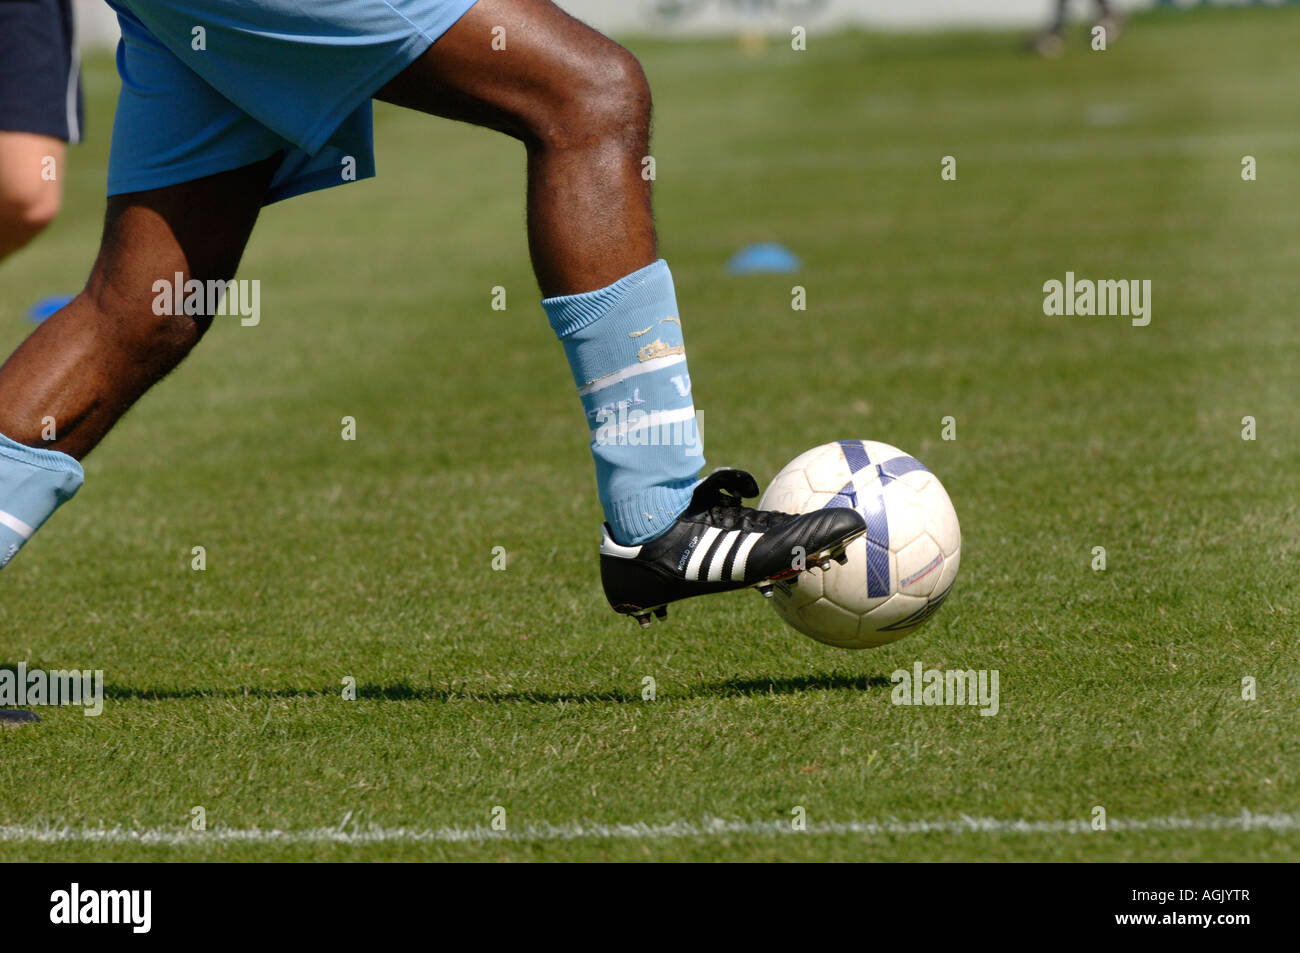 A footballer kicking a ball around, warming up before a match. Stock Photo